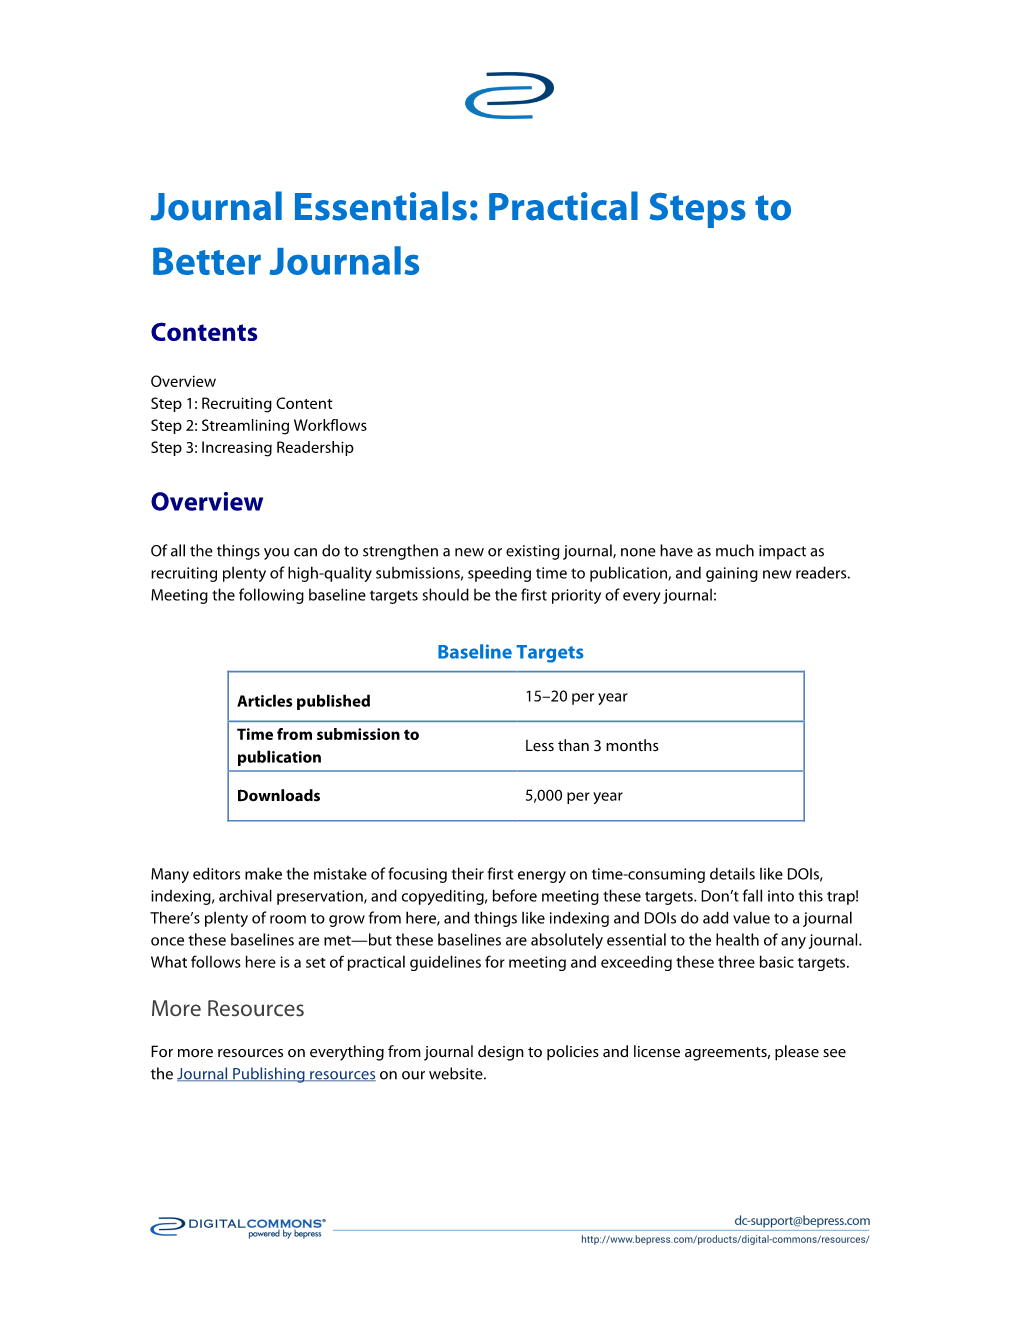 Journal Essentials: Practical Steps to Better Journals